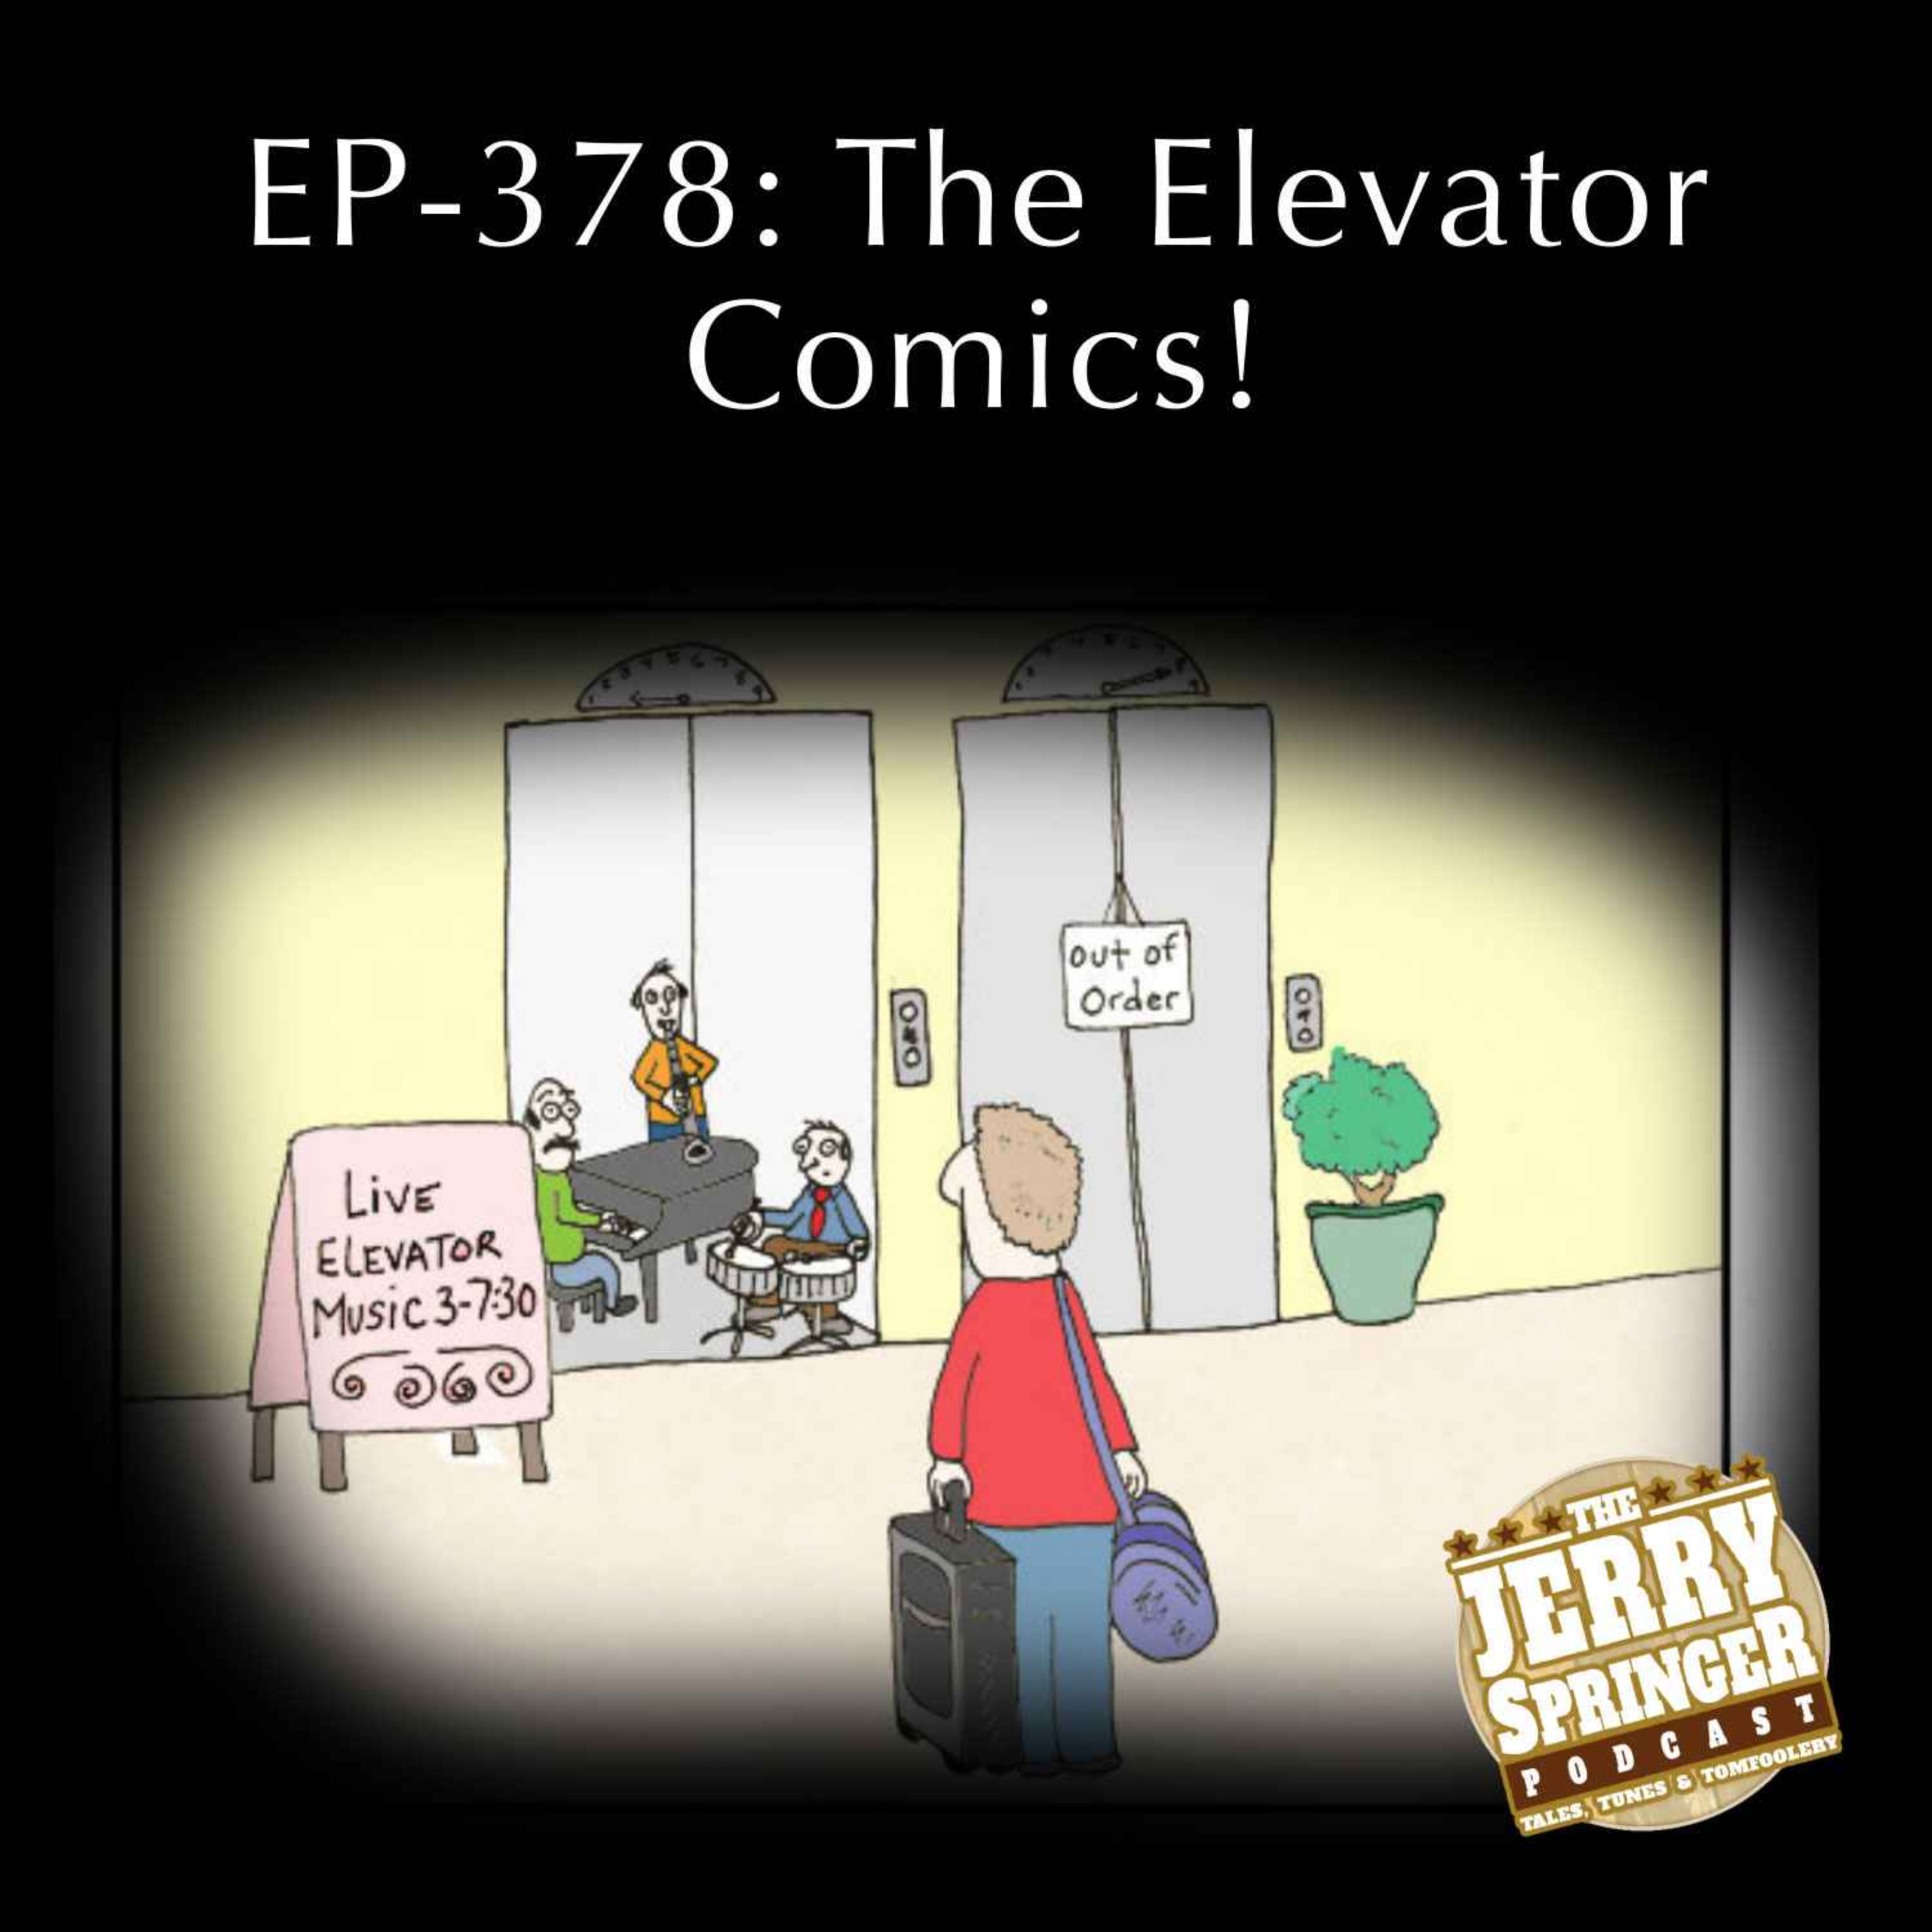 The Elevator Comics! EP - 378